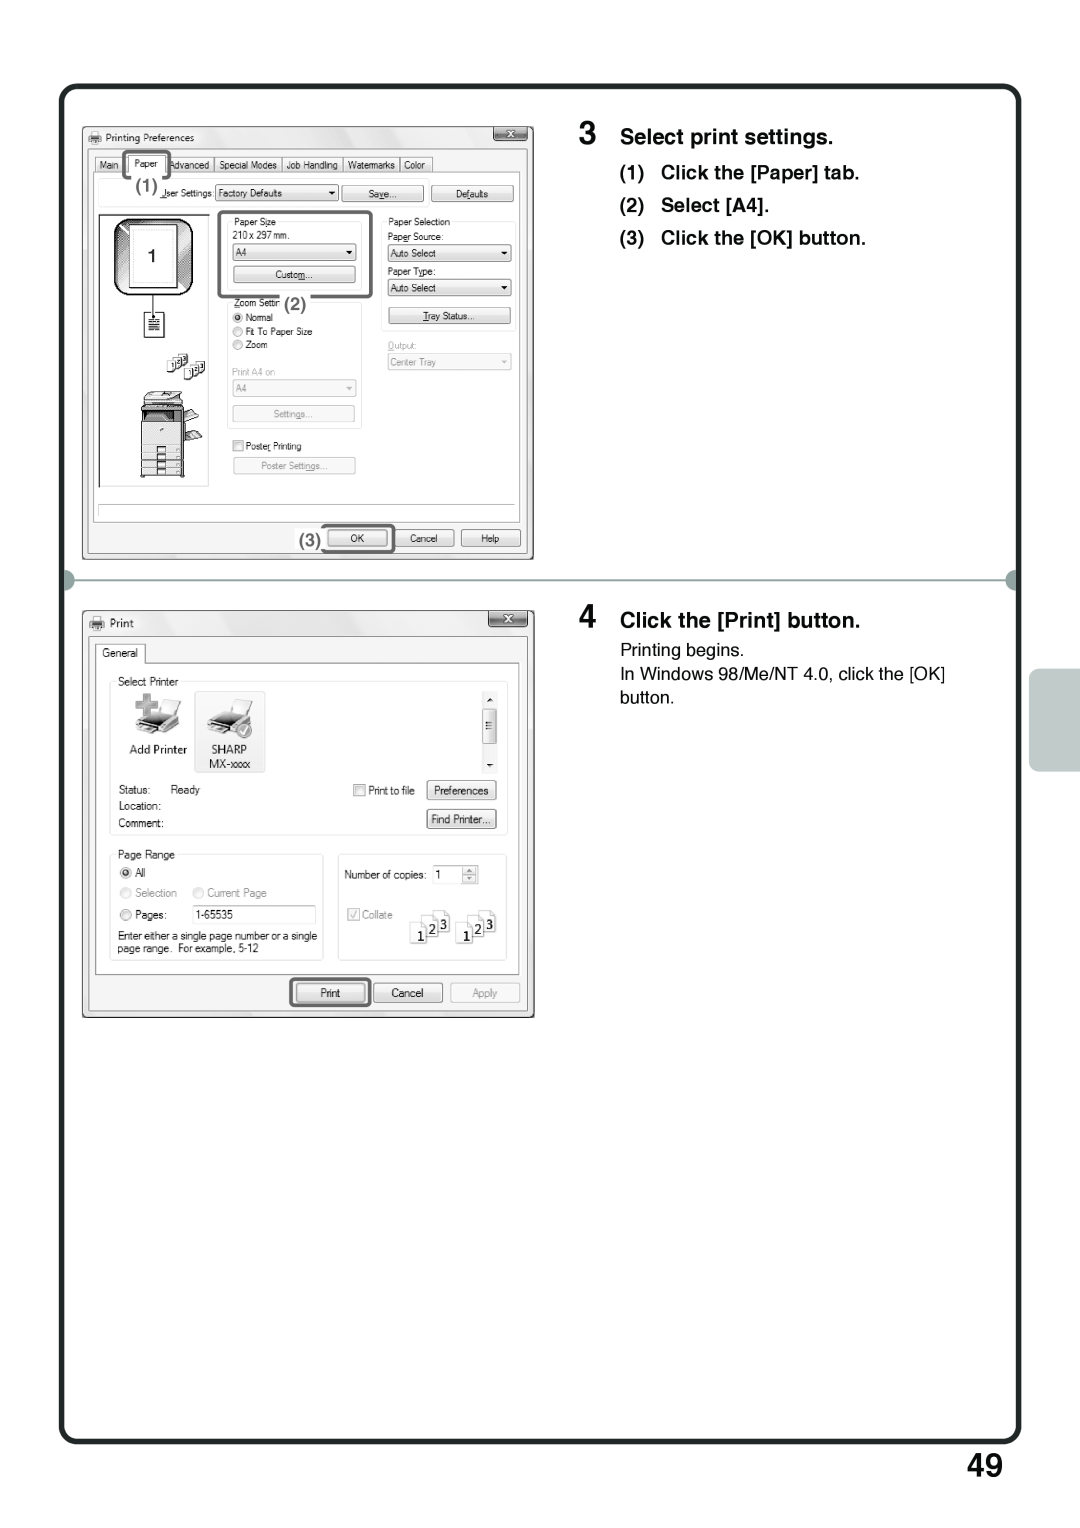 Sharp MX-5001N Select print settings, Click the Print button, Click the Paper tab 2 Select A4 3 Click the OK button 